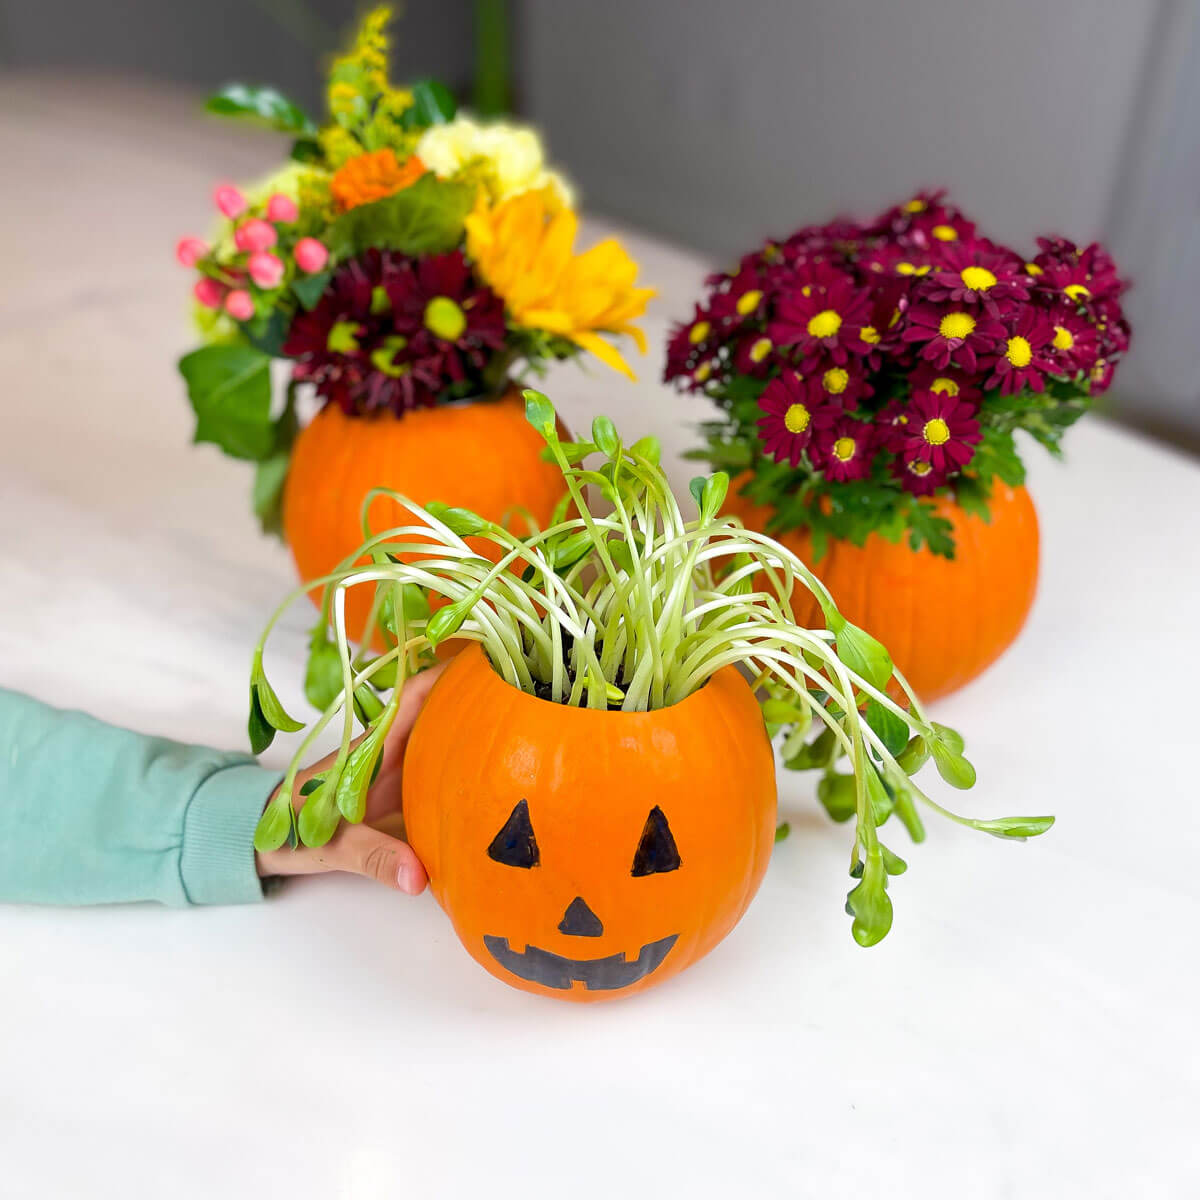 pumpkin activities growing pumpkin seeds in a pumpkin making a pumpkin flower pot growing plants in a pumpkin